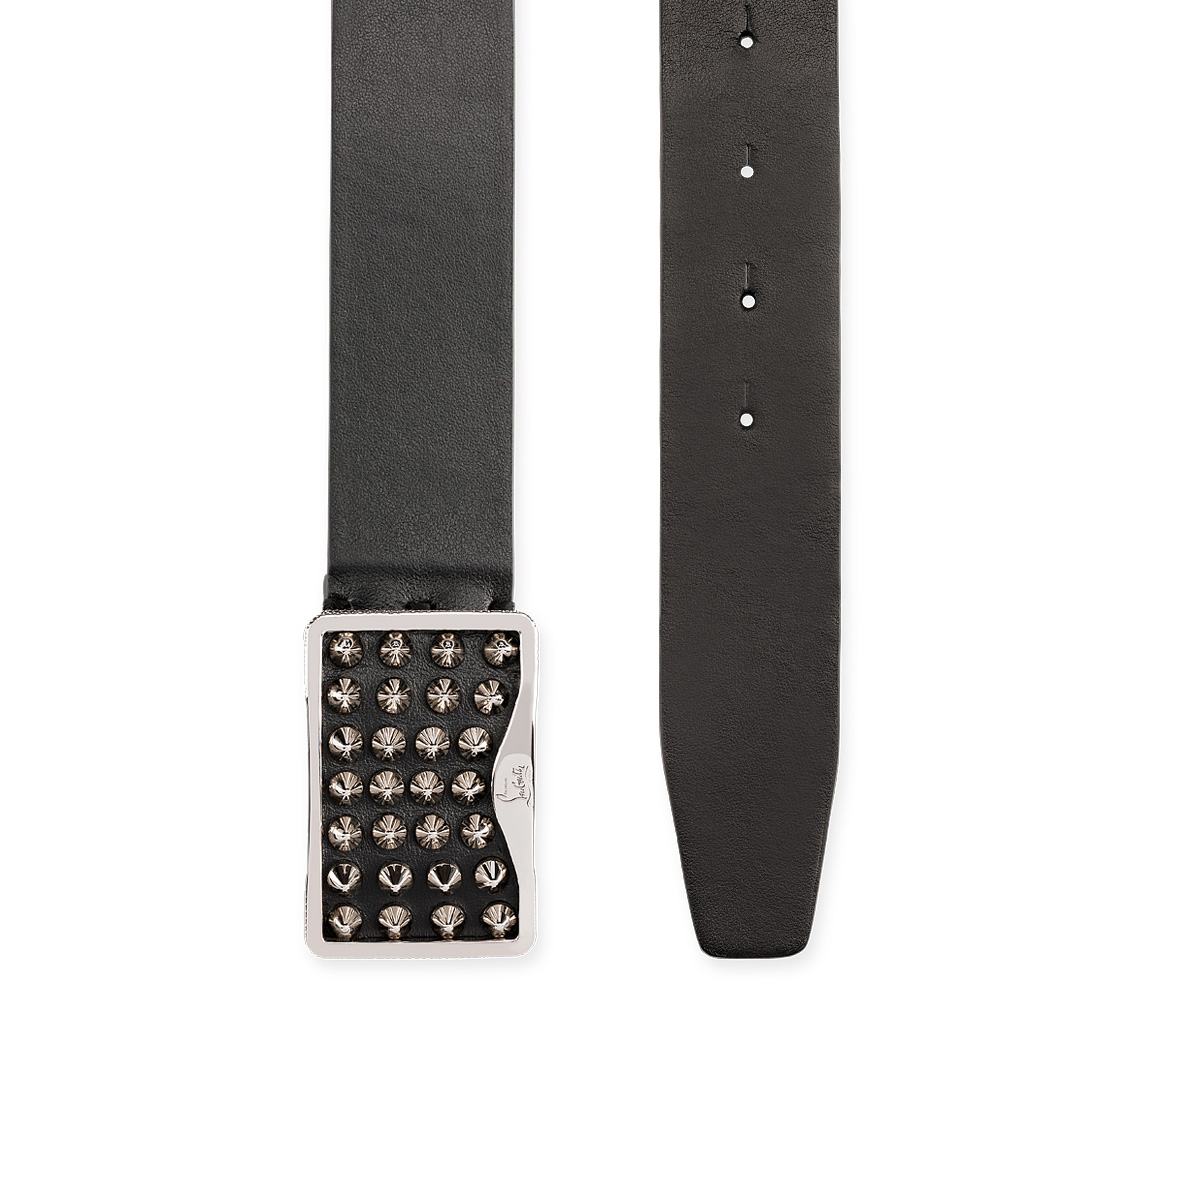 MTD Style / Louis Vuitton belt - Christian Louboutin shoes